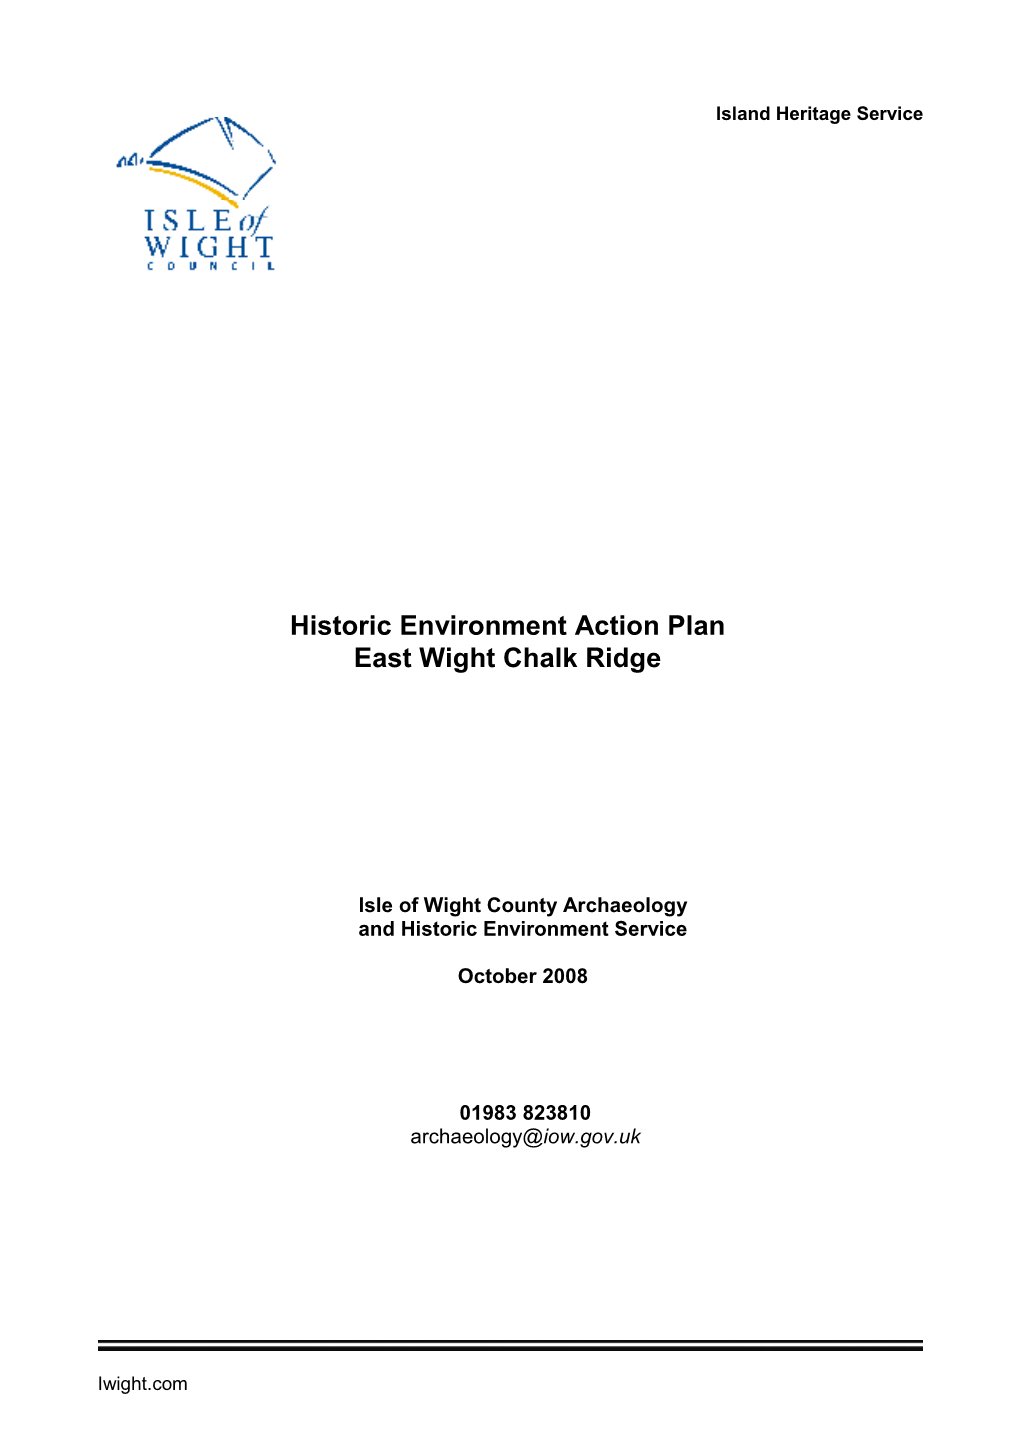 Historic Environment Action Plan East Wight Chalk Ridge